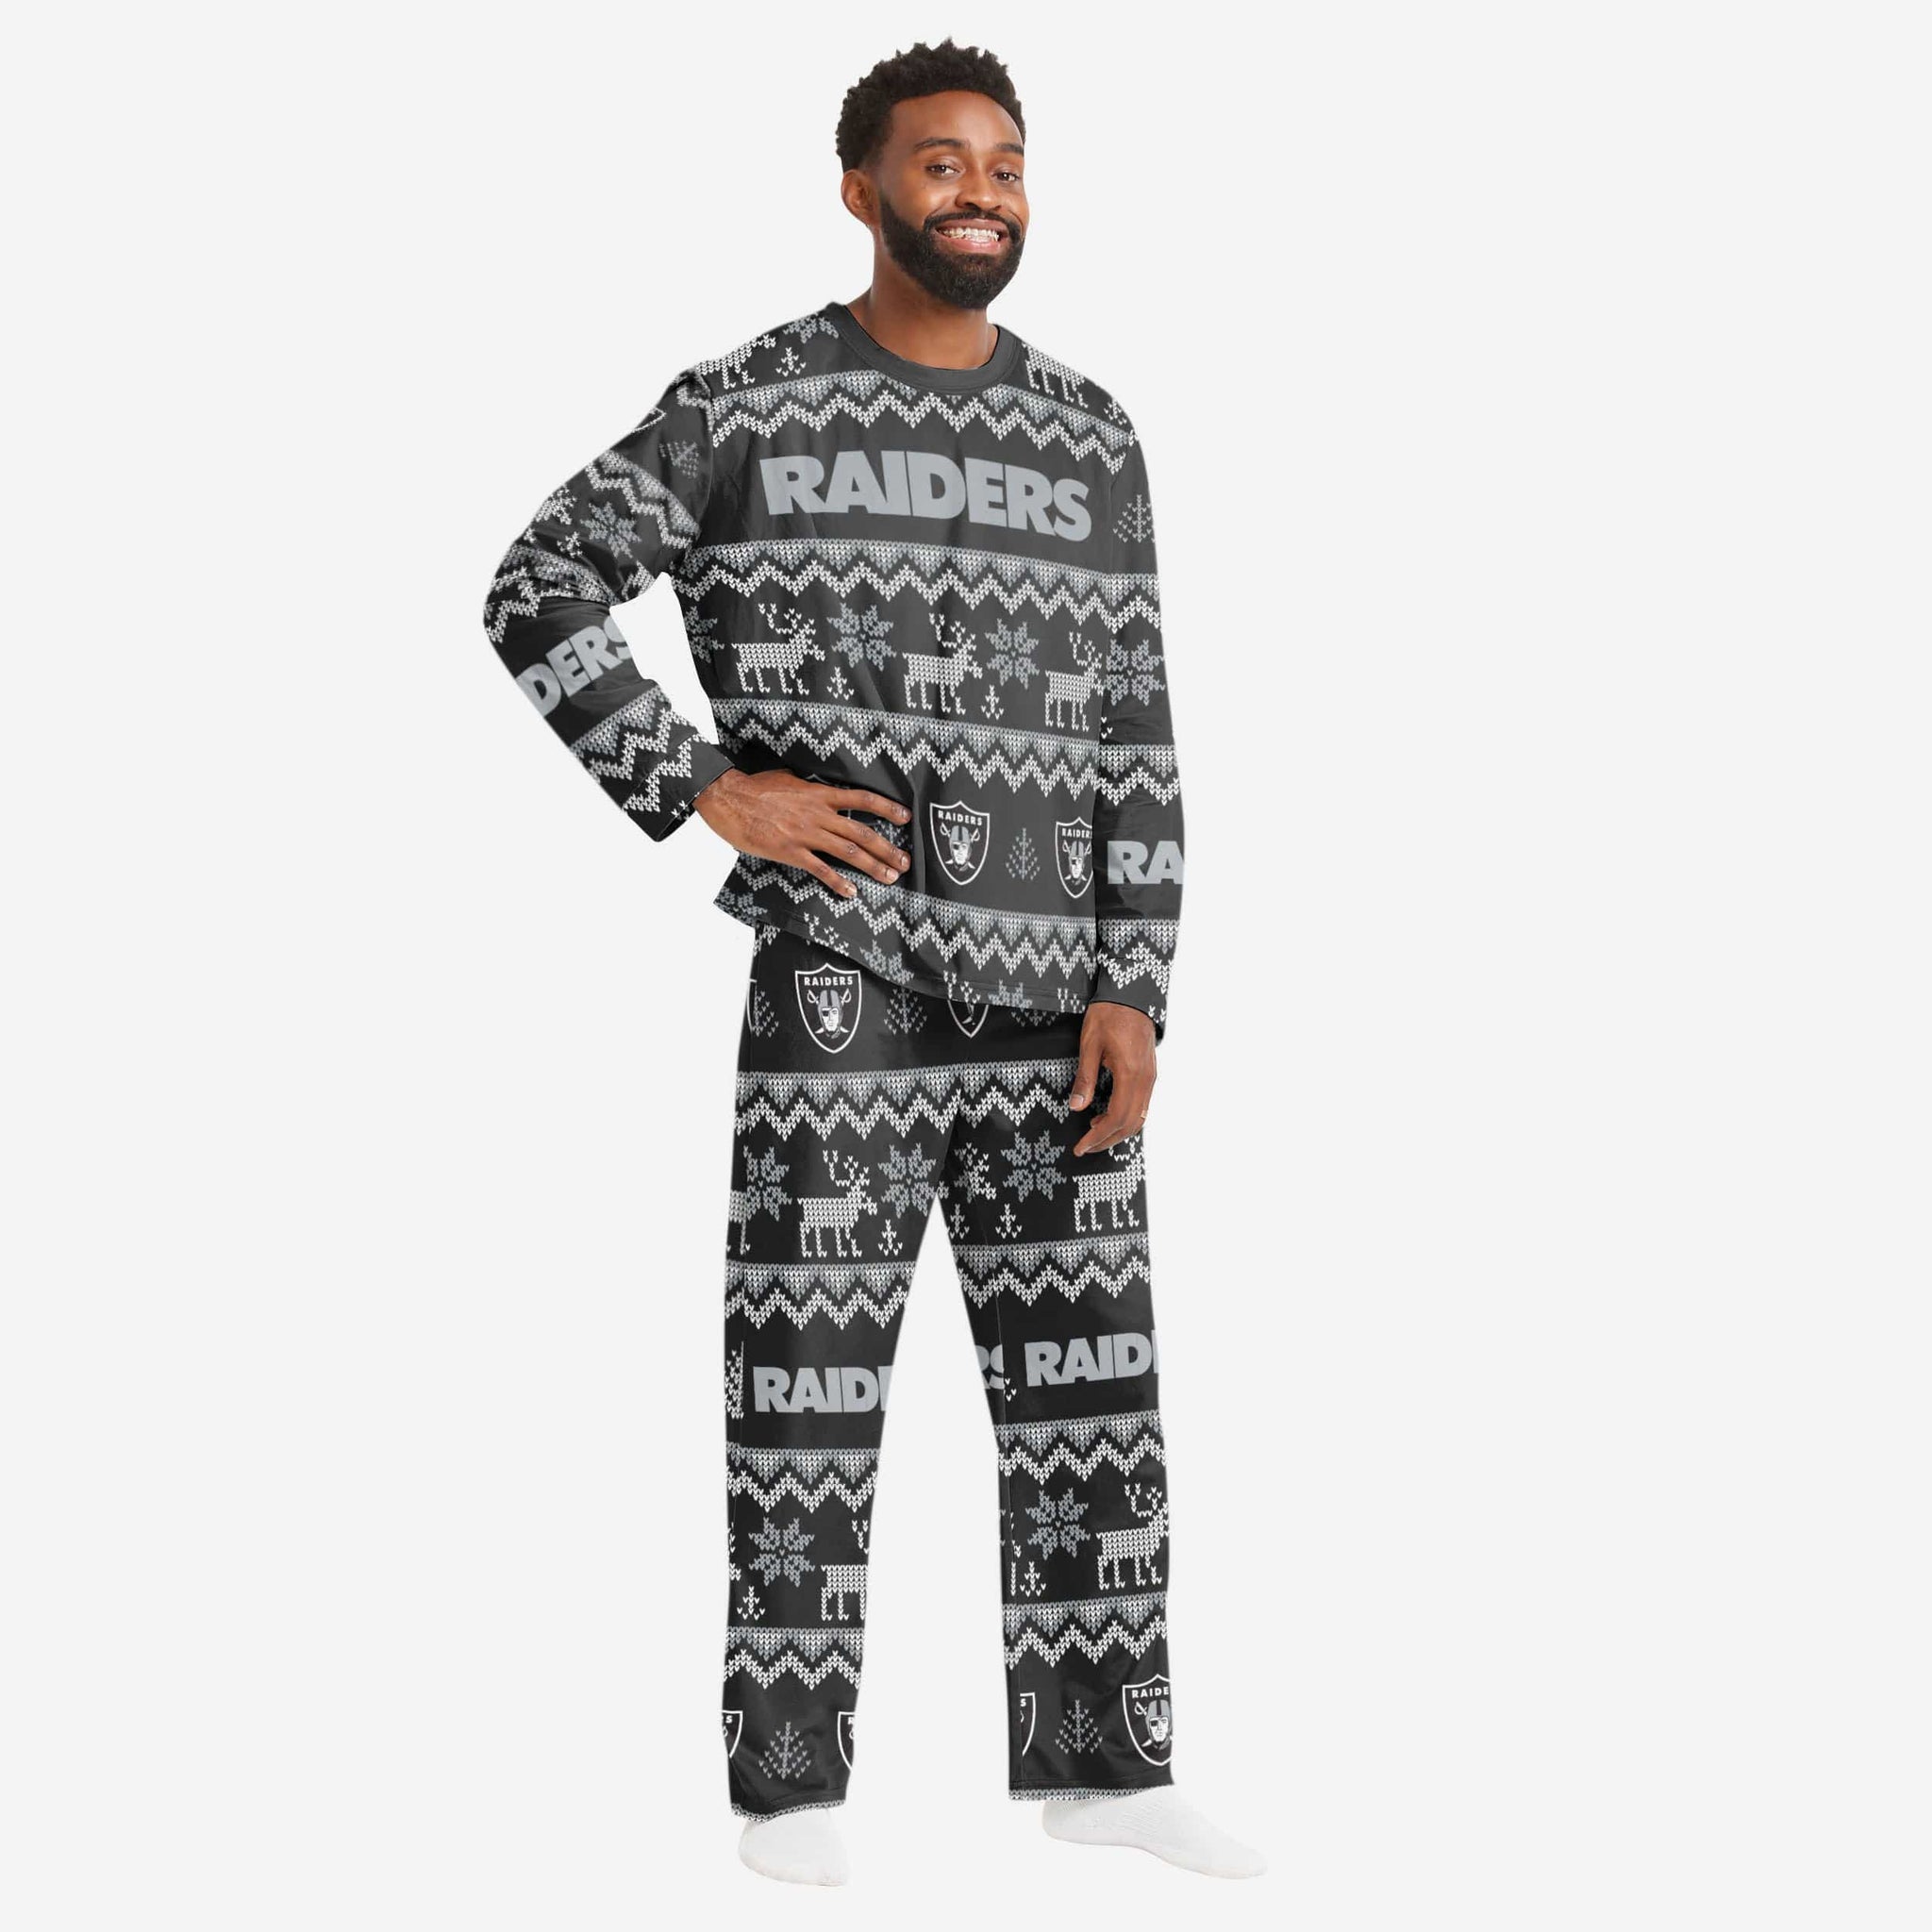 FOCO Las Vegas Raiders Men's Scatter Pattern Pajama Lounge Multi Color Pants